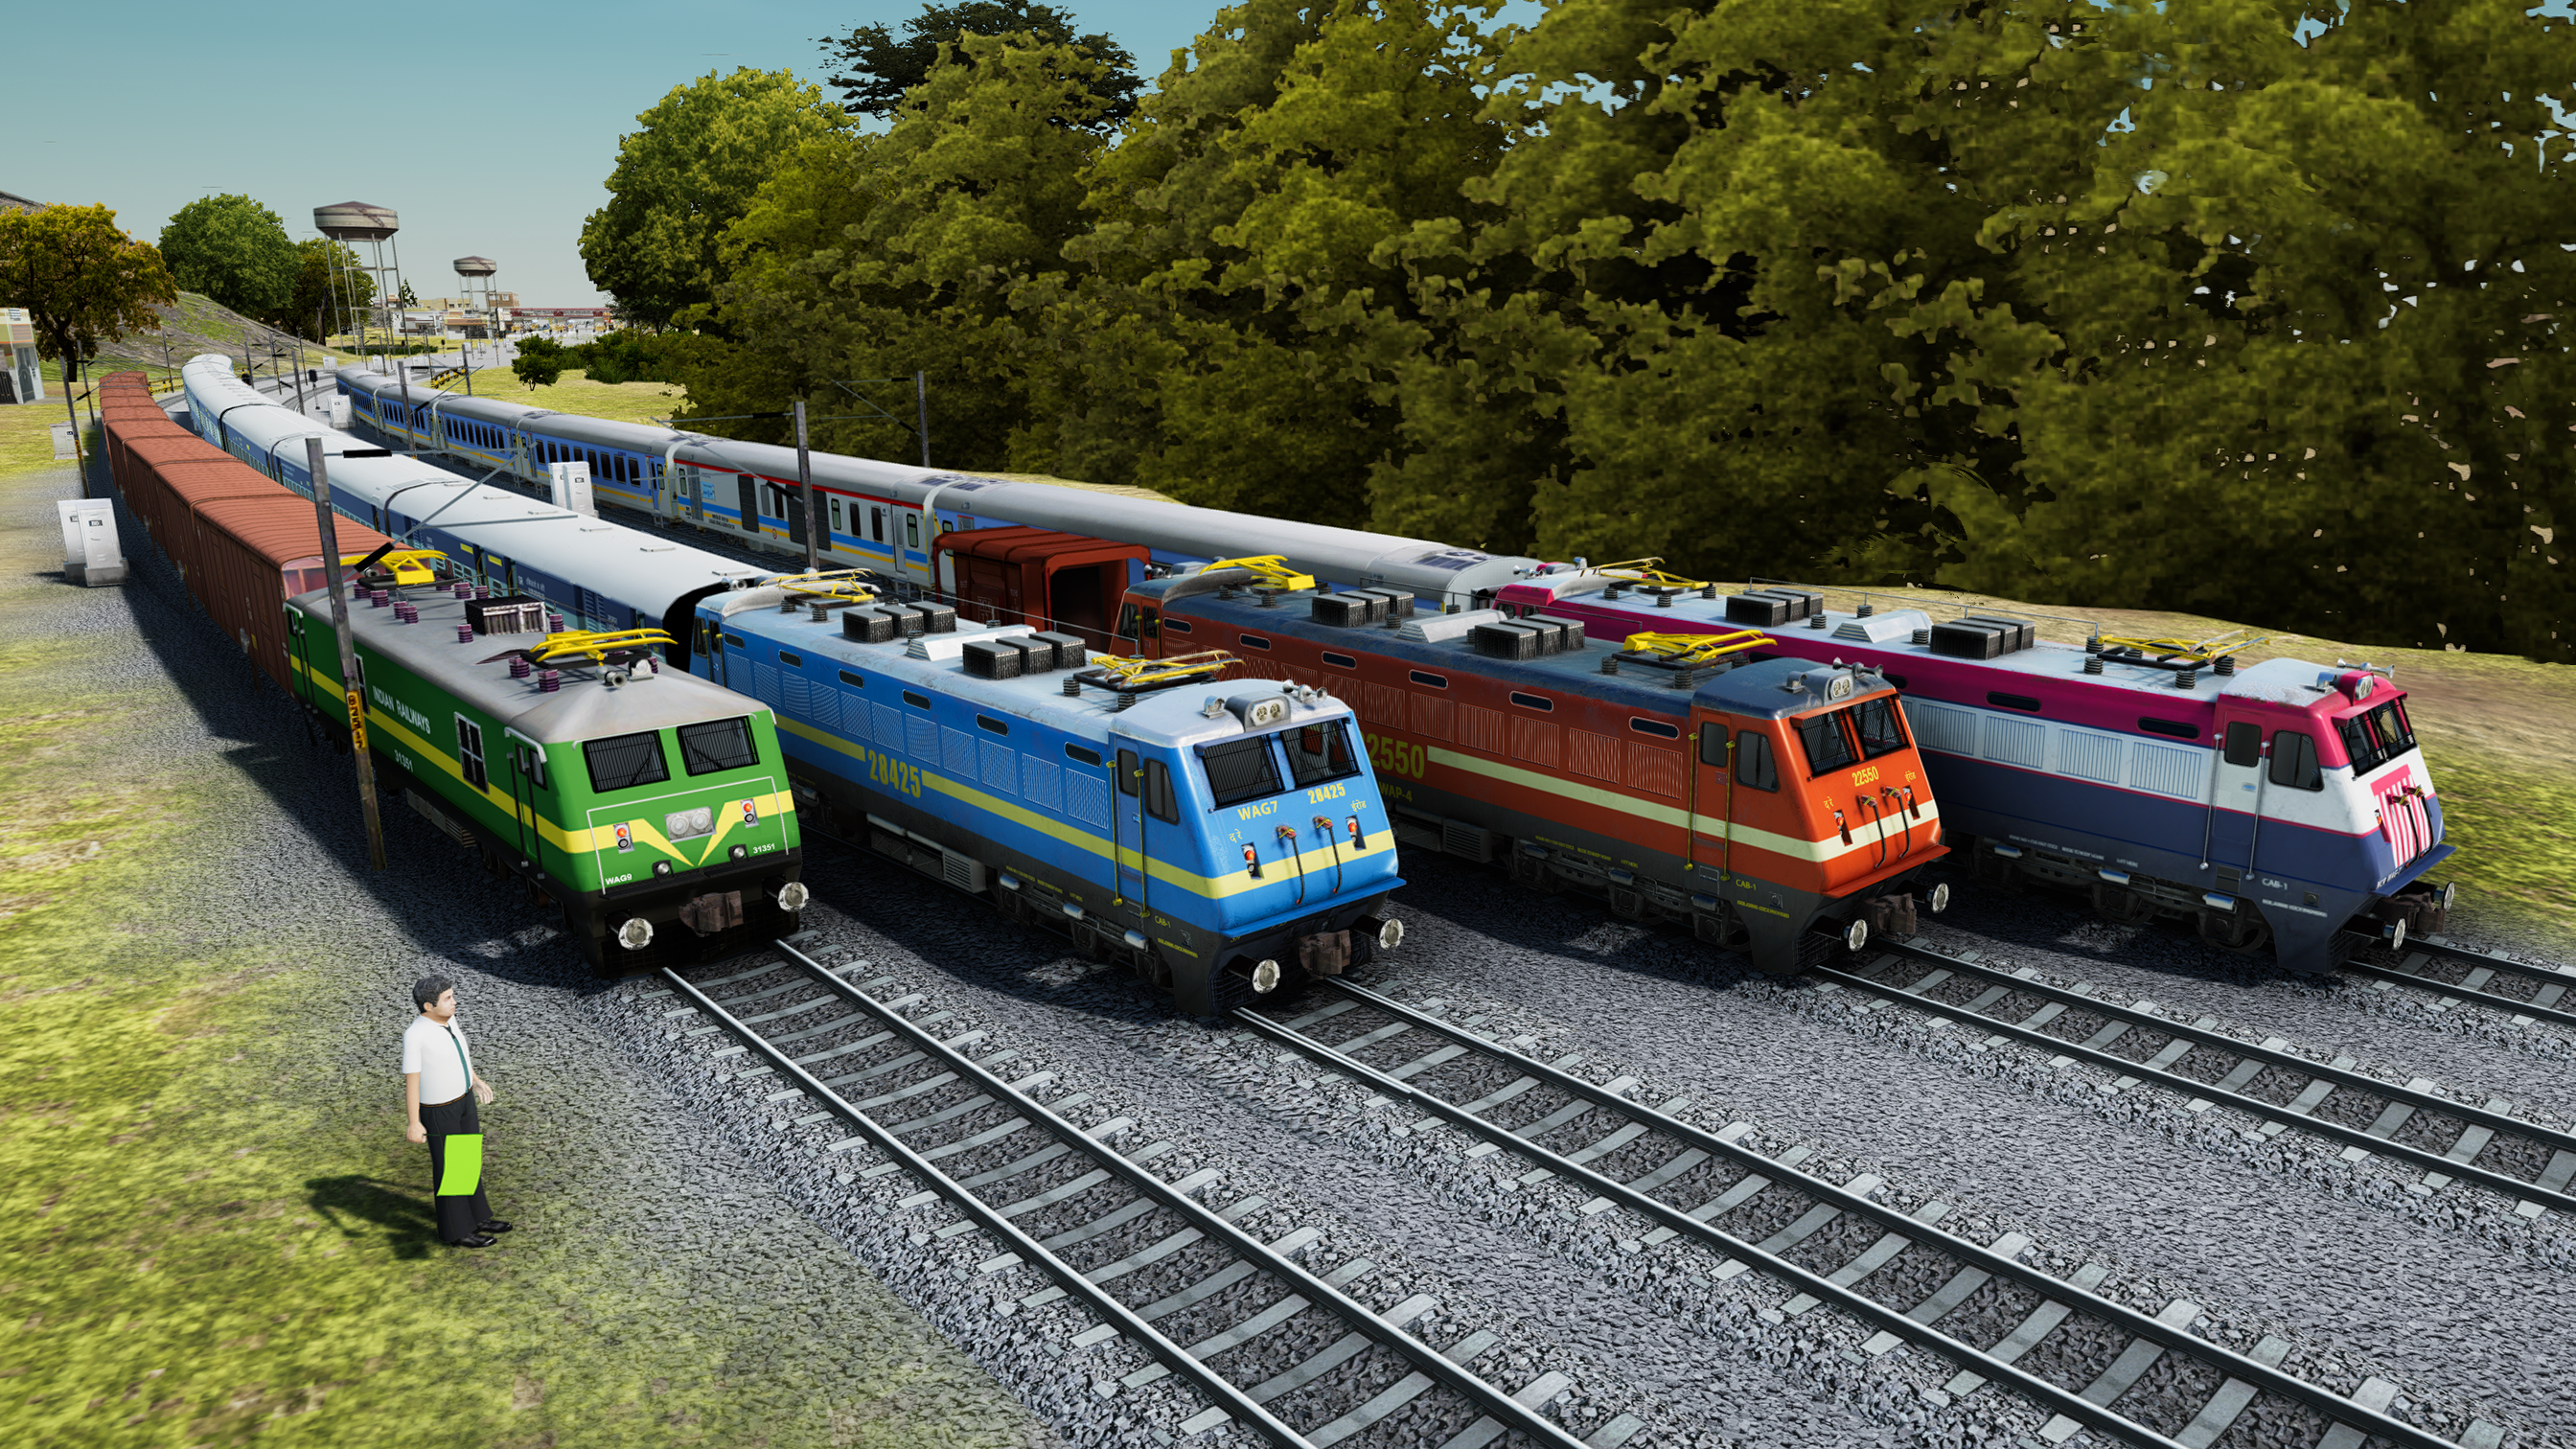 Race Train Driver- Train Games – Apps no Google Play